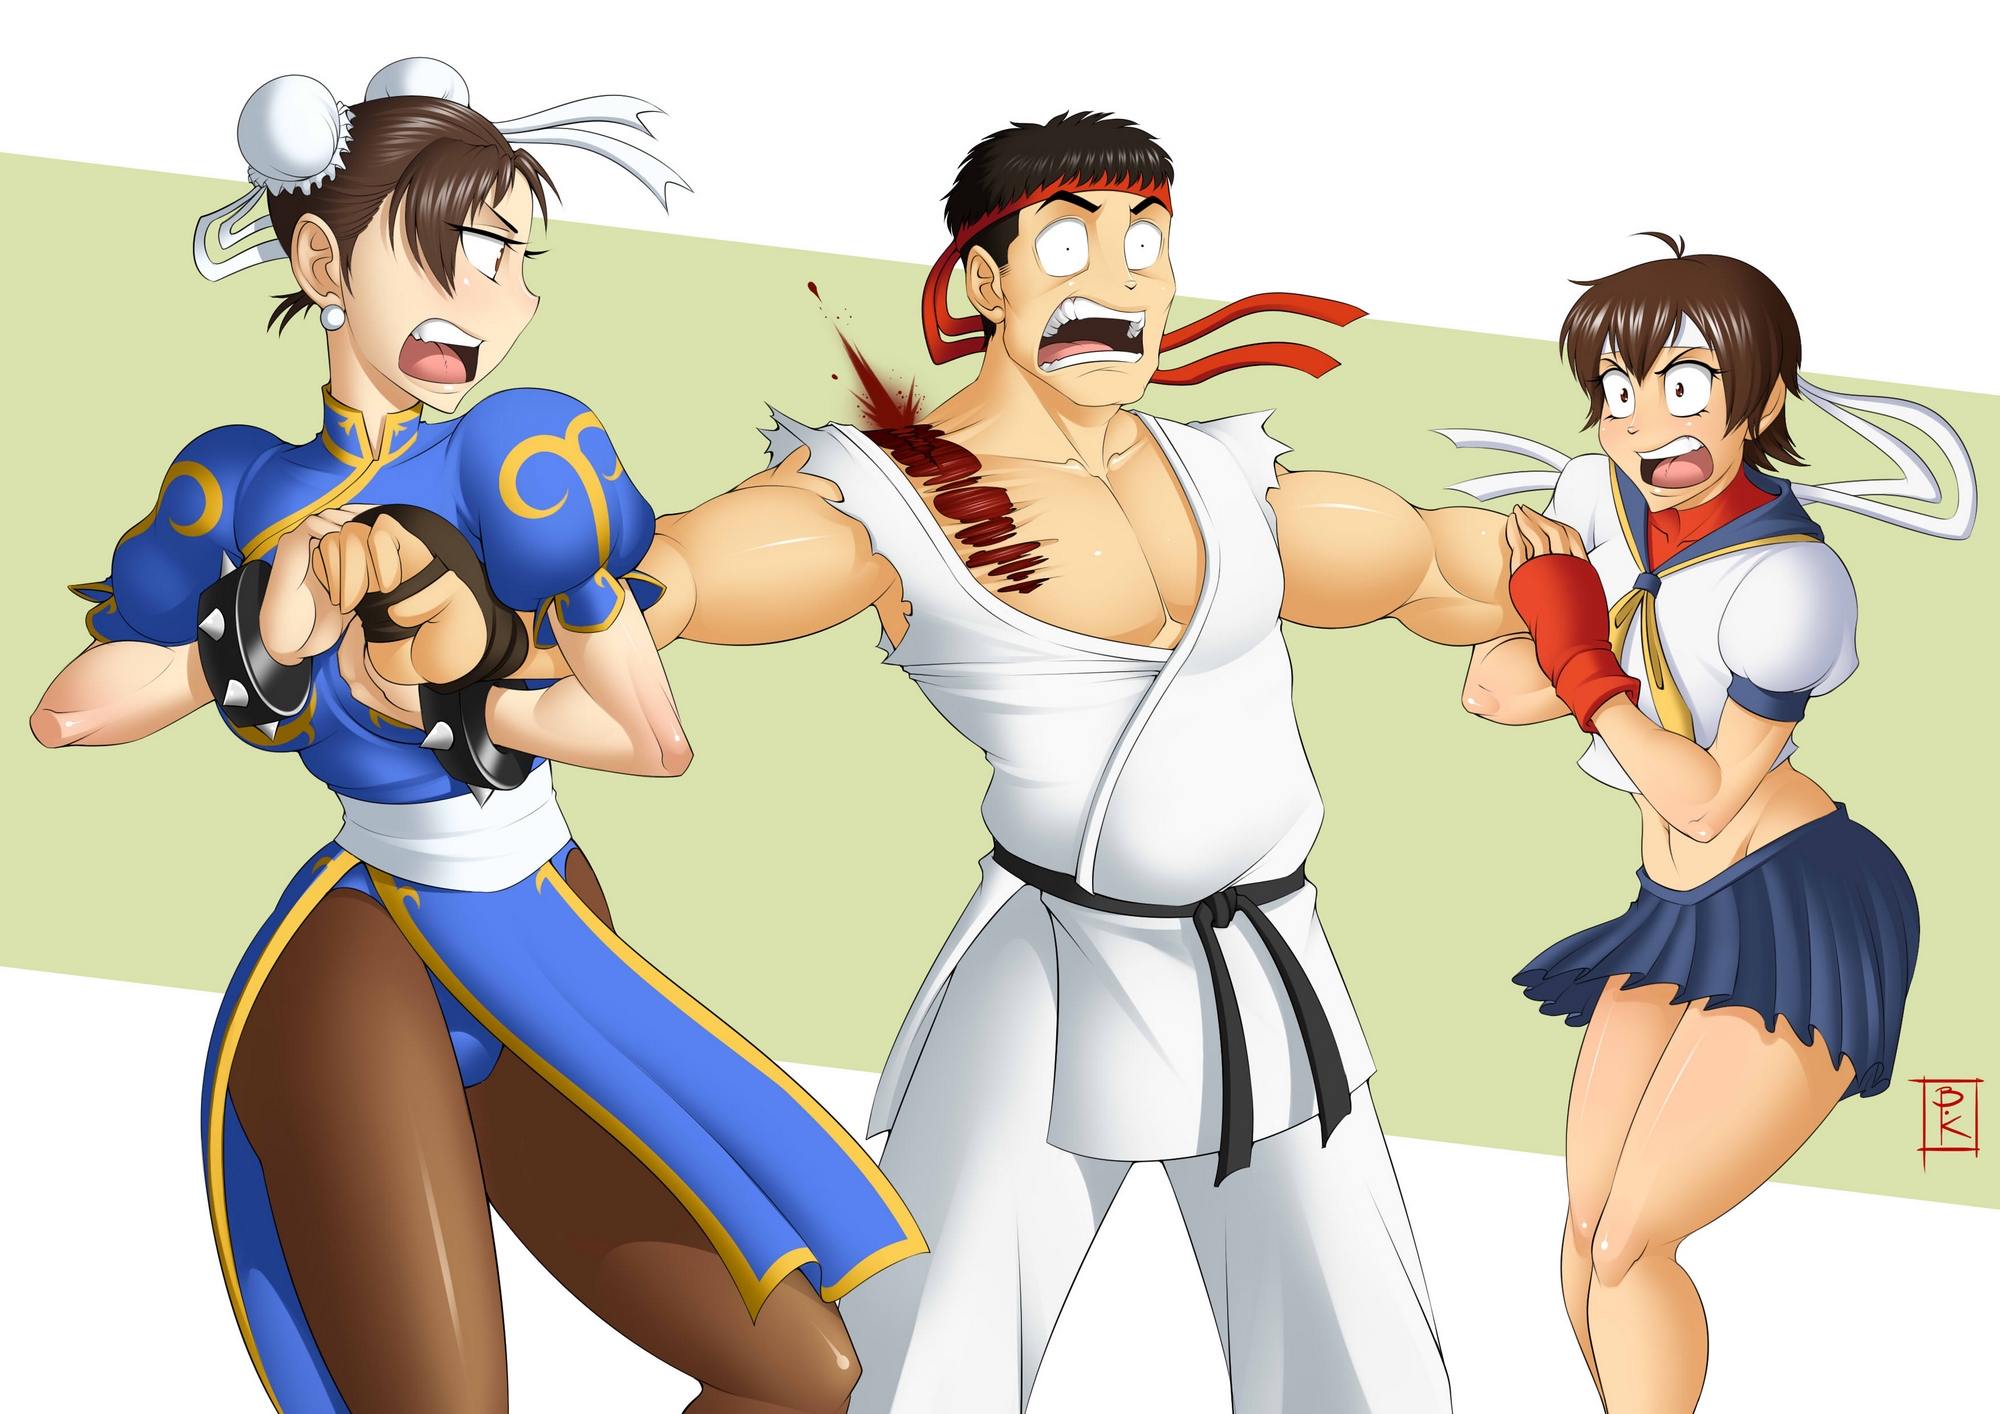 Chun-Li and Sakura fighting over Ryu. 